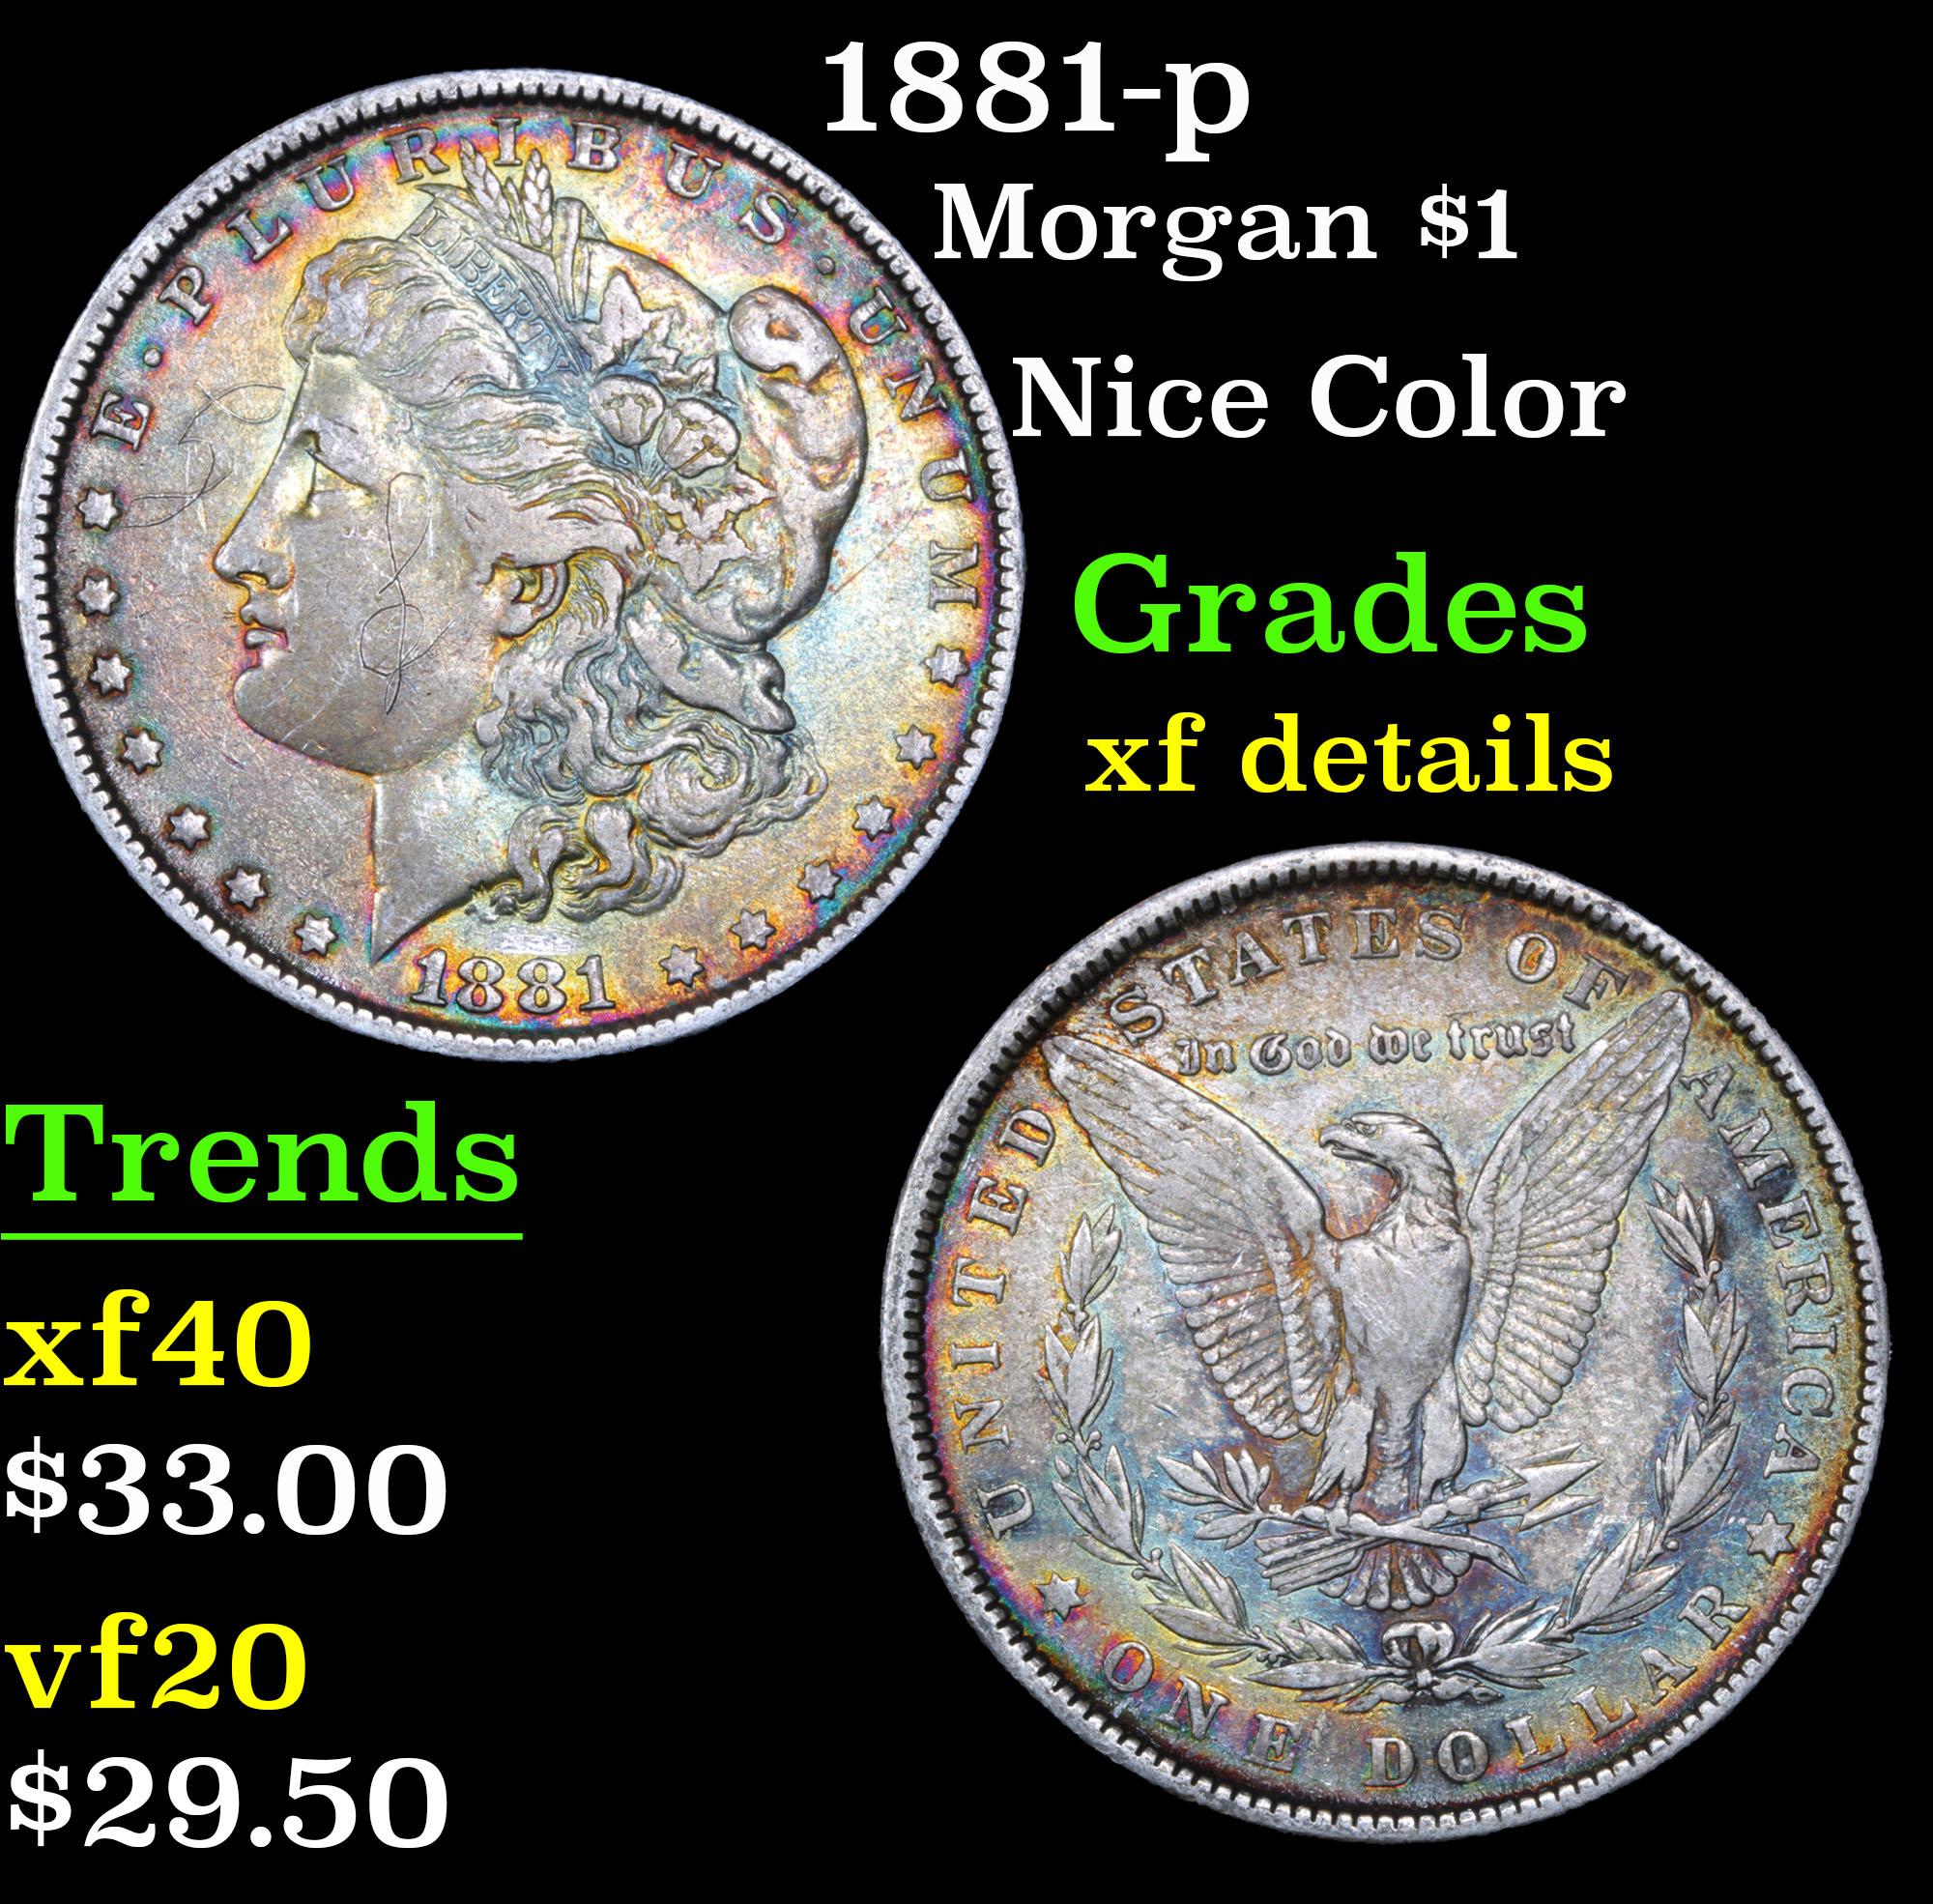 1881-p Morgan Dollar $1 Grades xf details